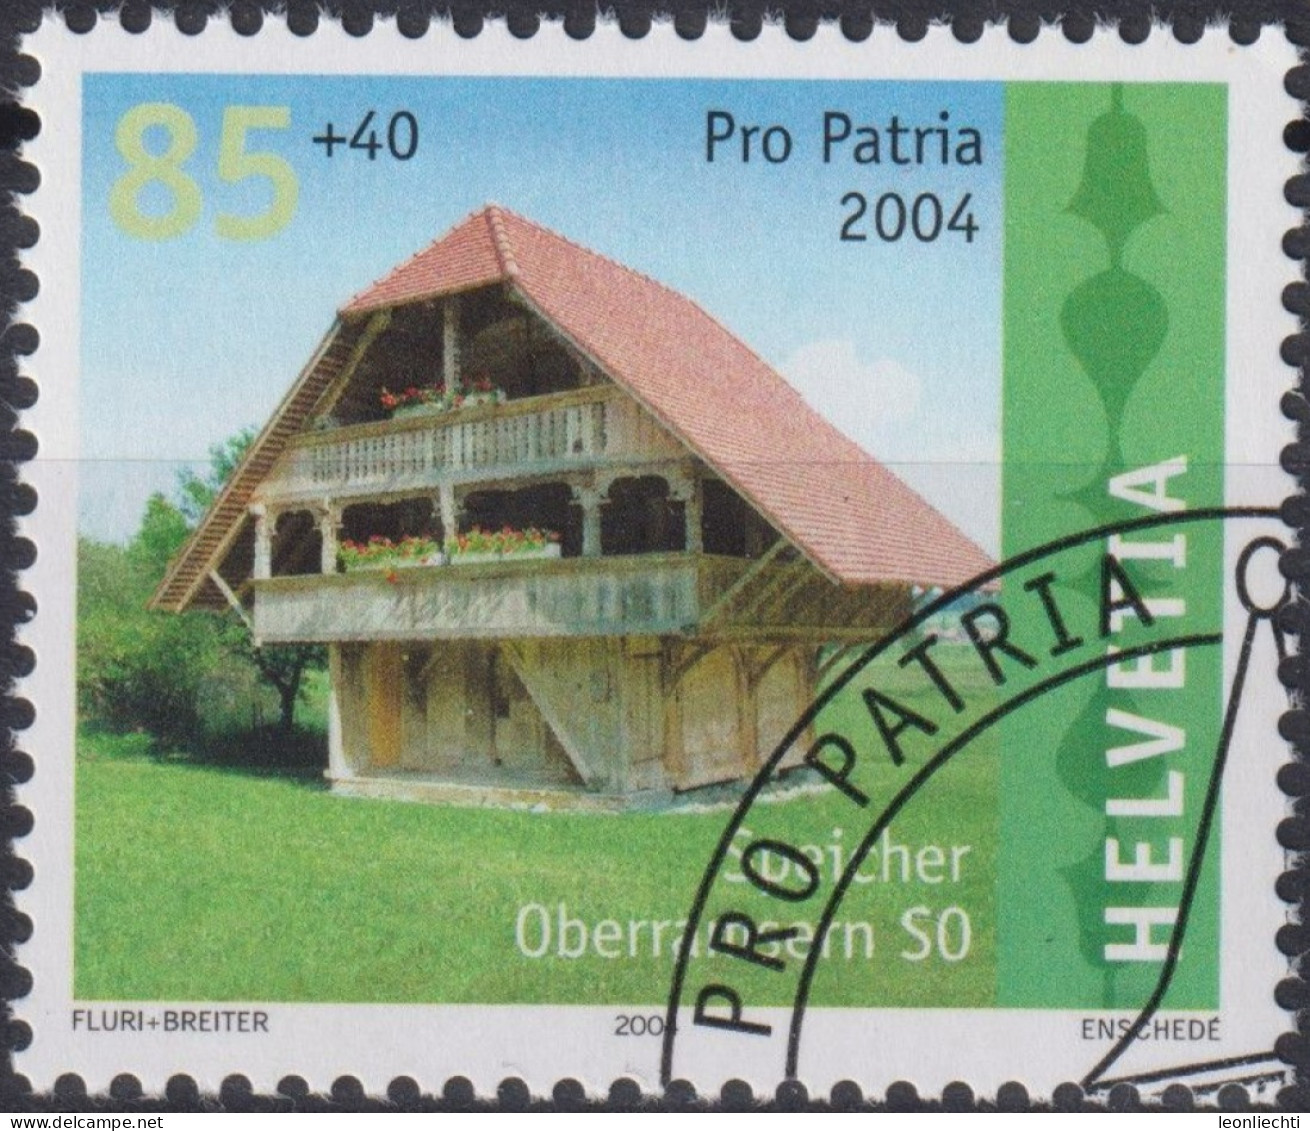 2004 Schweiz Pro Patria, Speicher, Oberramsern SO ⵙ Zum:CH B285, Mi:CH 1875, Yt:CH 1805 - Usati